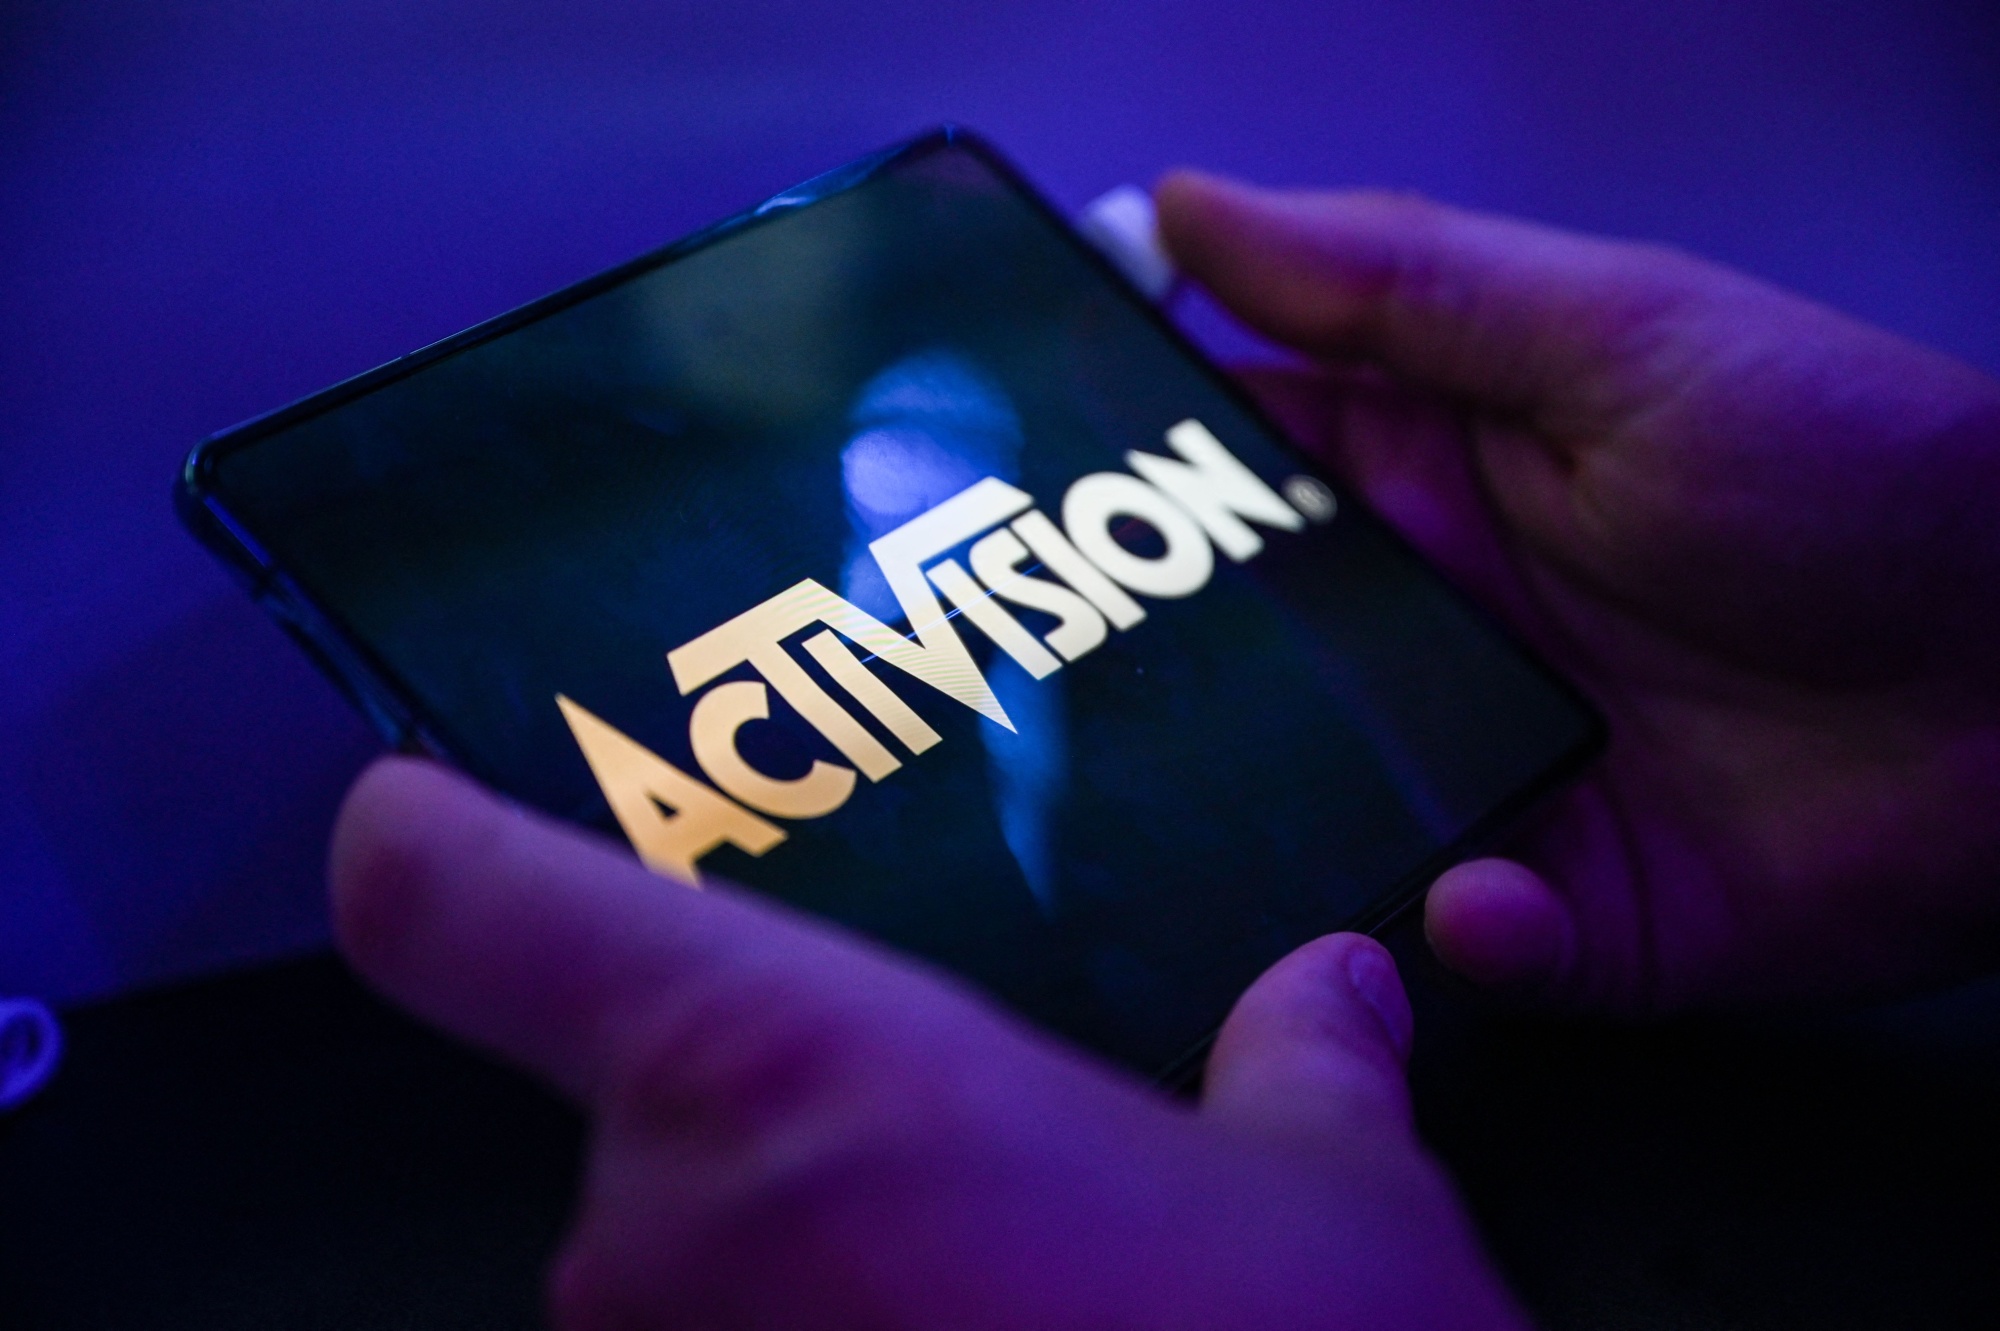 Activision Publishing, Closing Logo Group